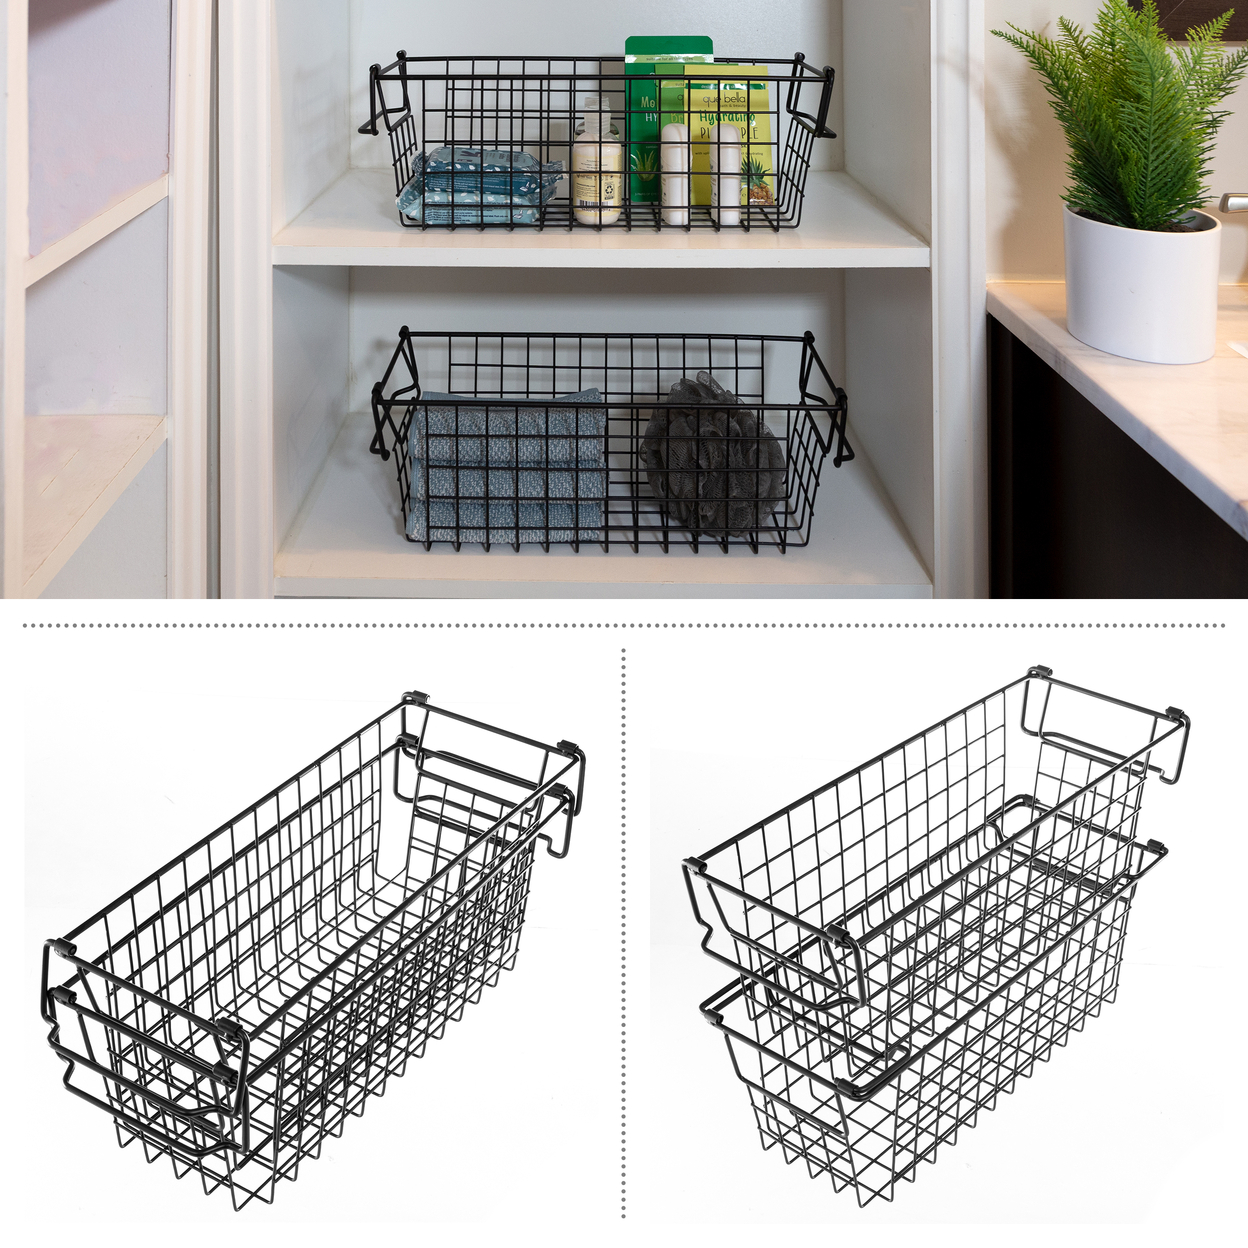 2 Storage Bins Small Shelf Organizers For Kitchen Bathroom Storage, Black